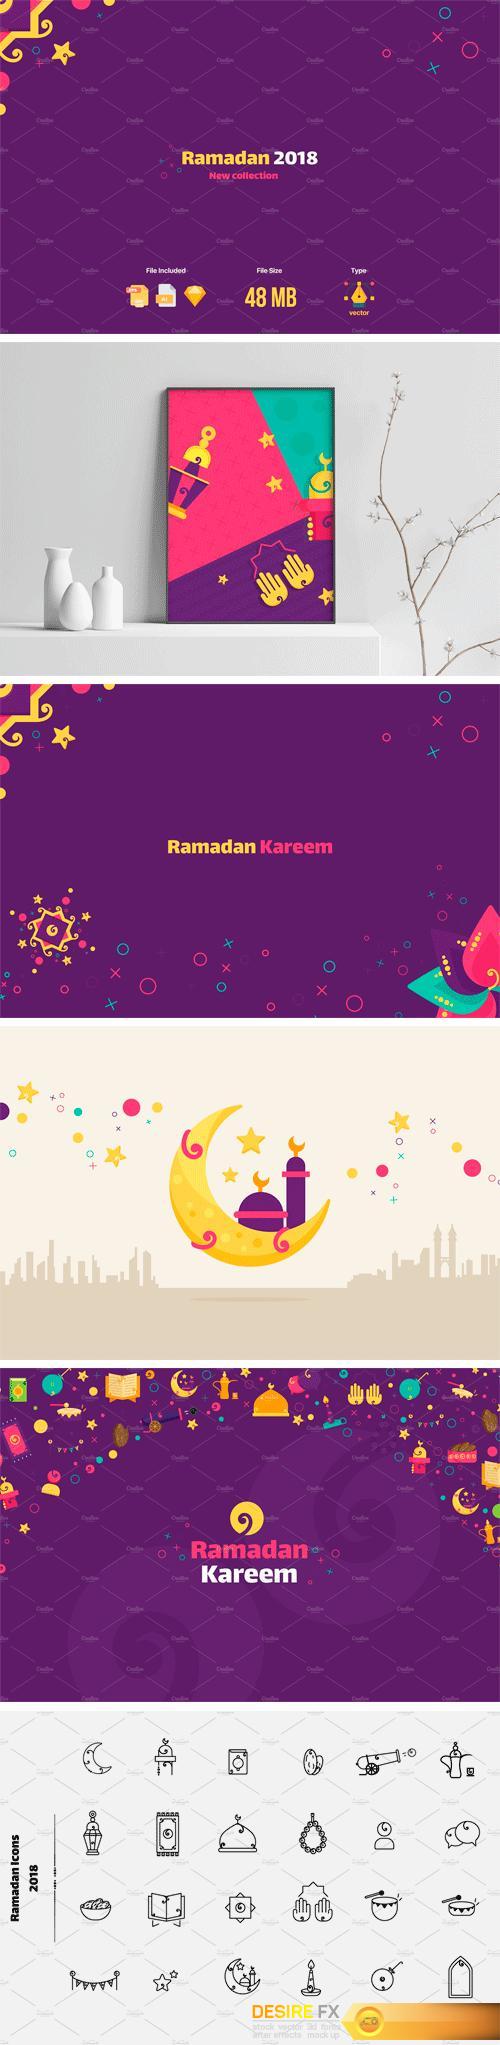 CM - Ramadan New Collection 2018 2392786